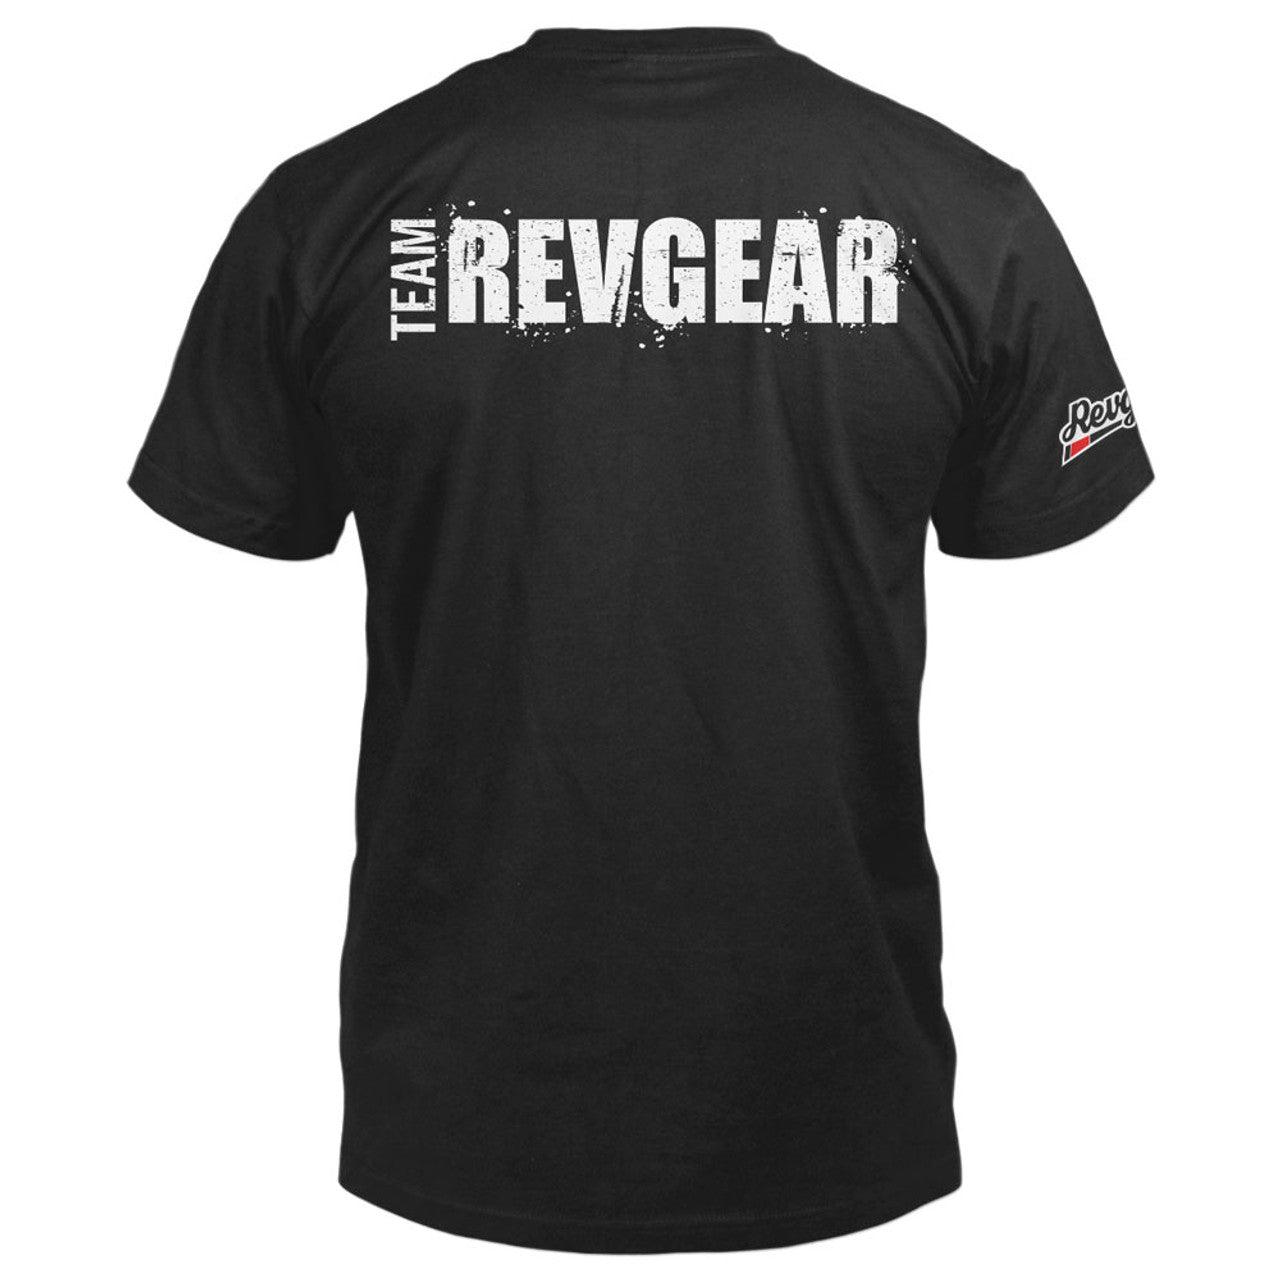 Team Revgear Jiu Jitsu Tee - Black - Violent Art Shop